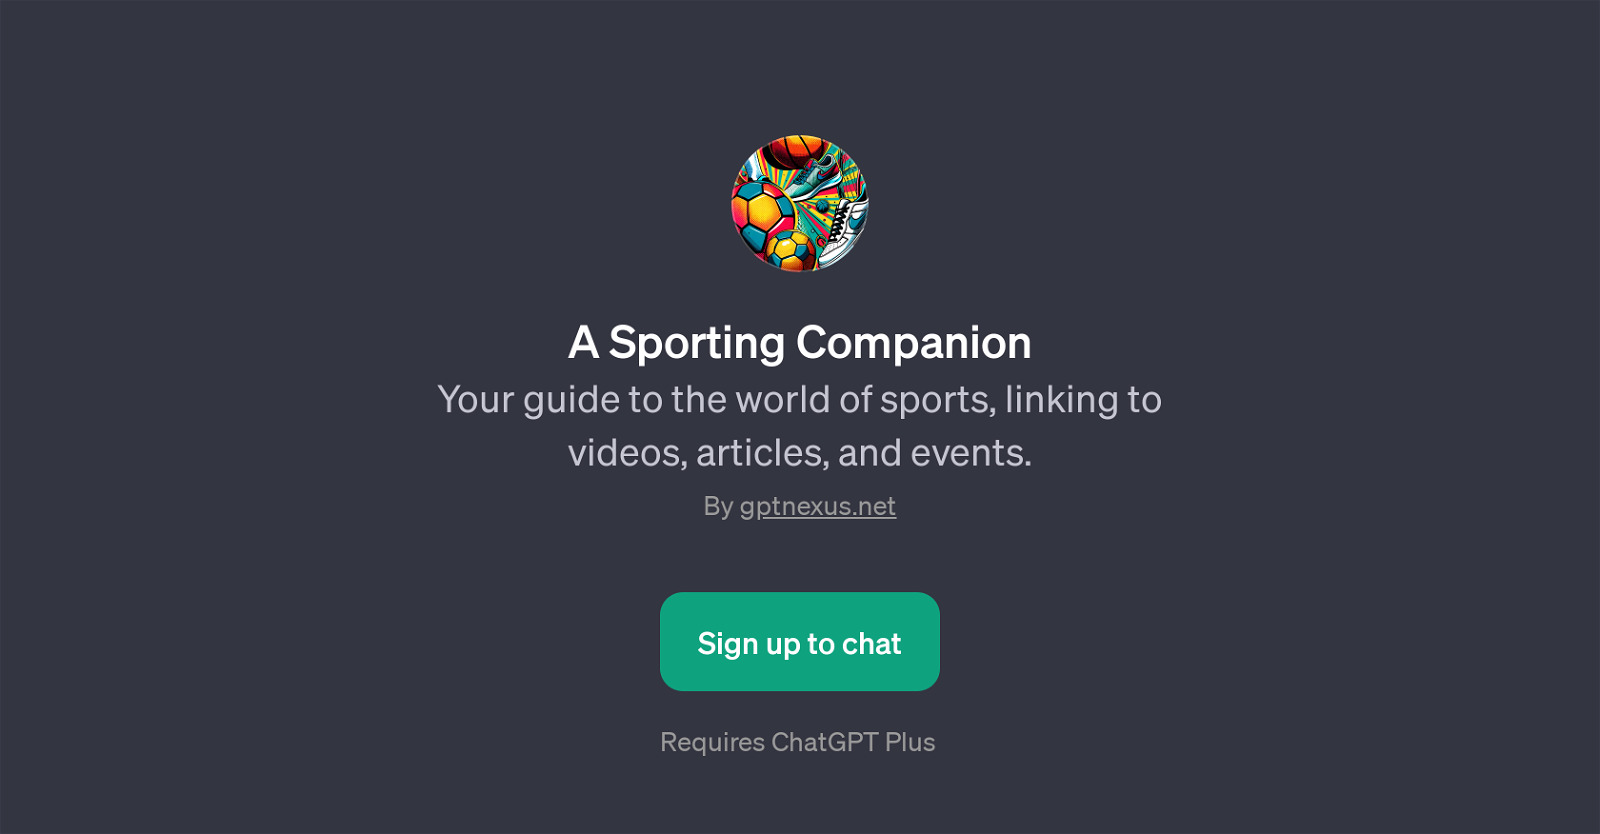 A Sporting Companion website